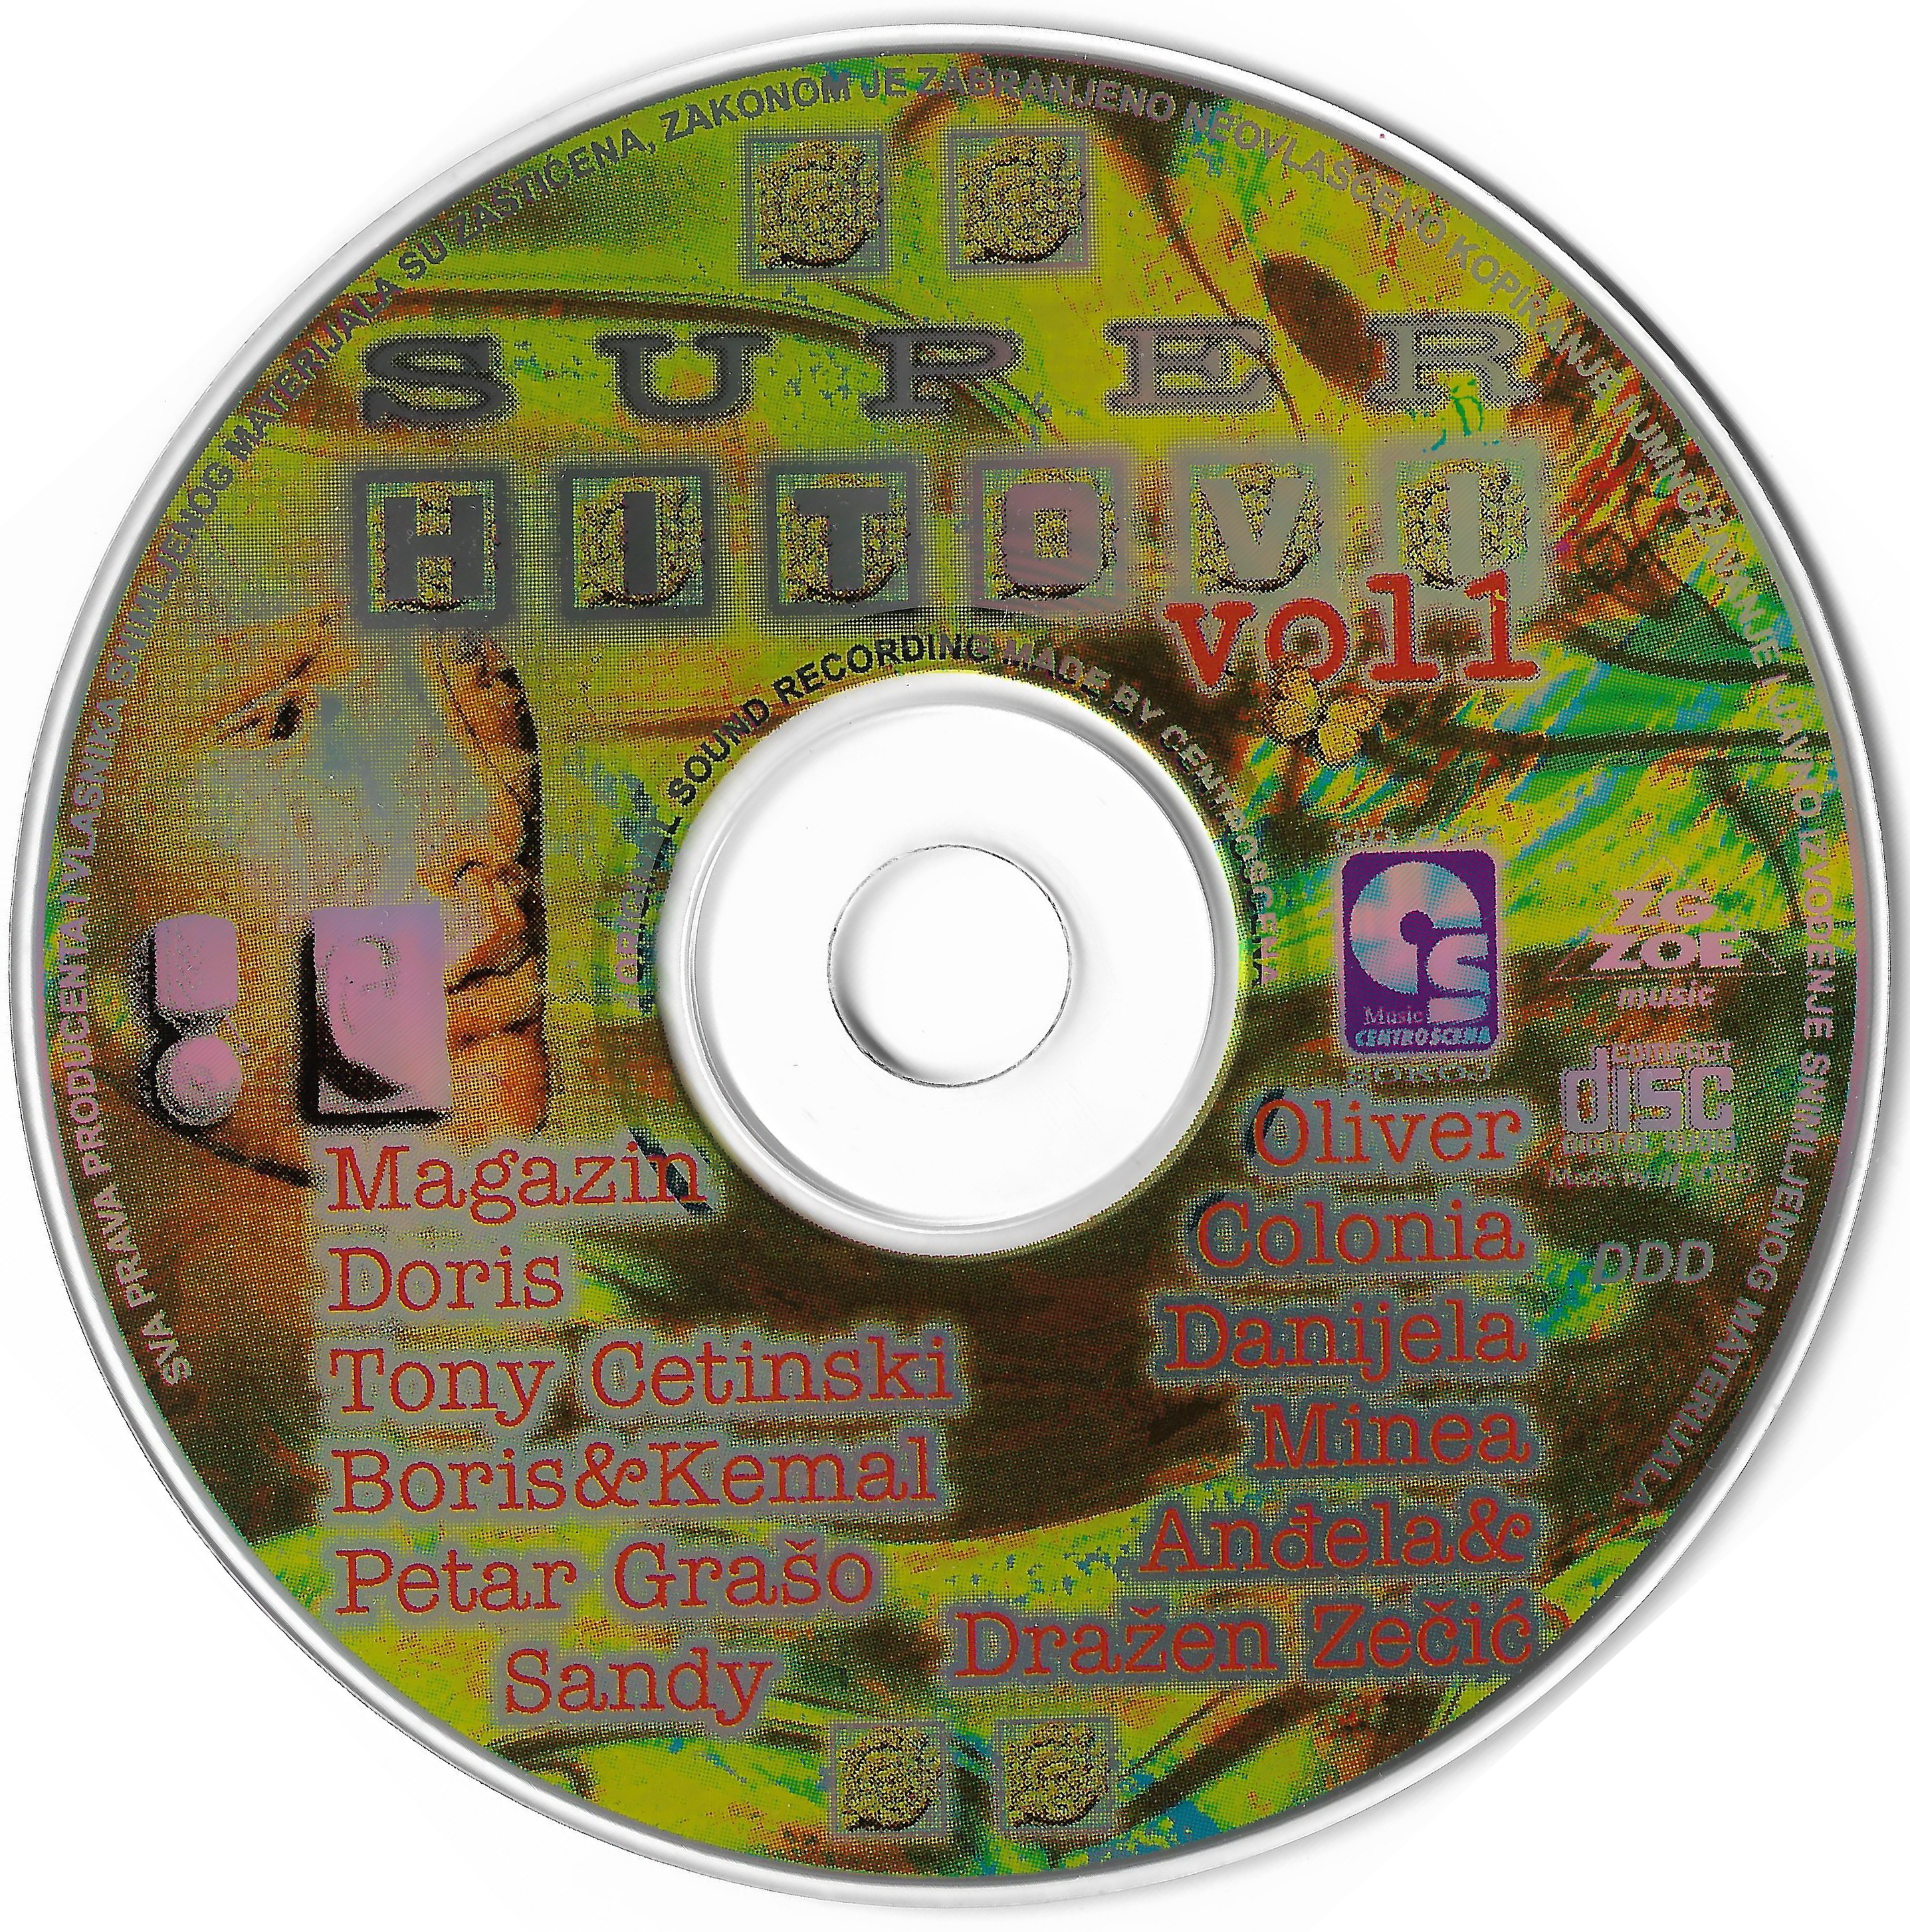 CSSH 1 CD 5